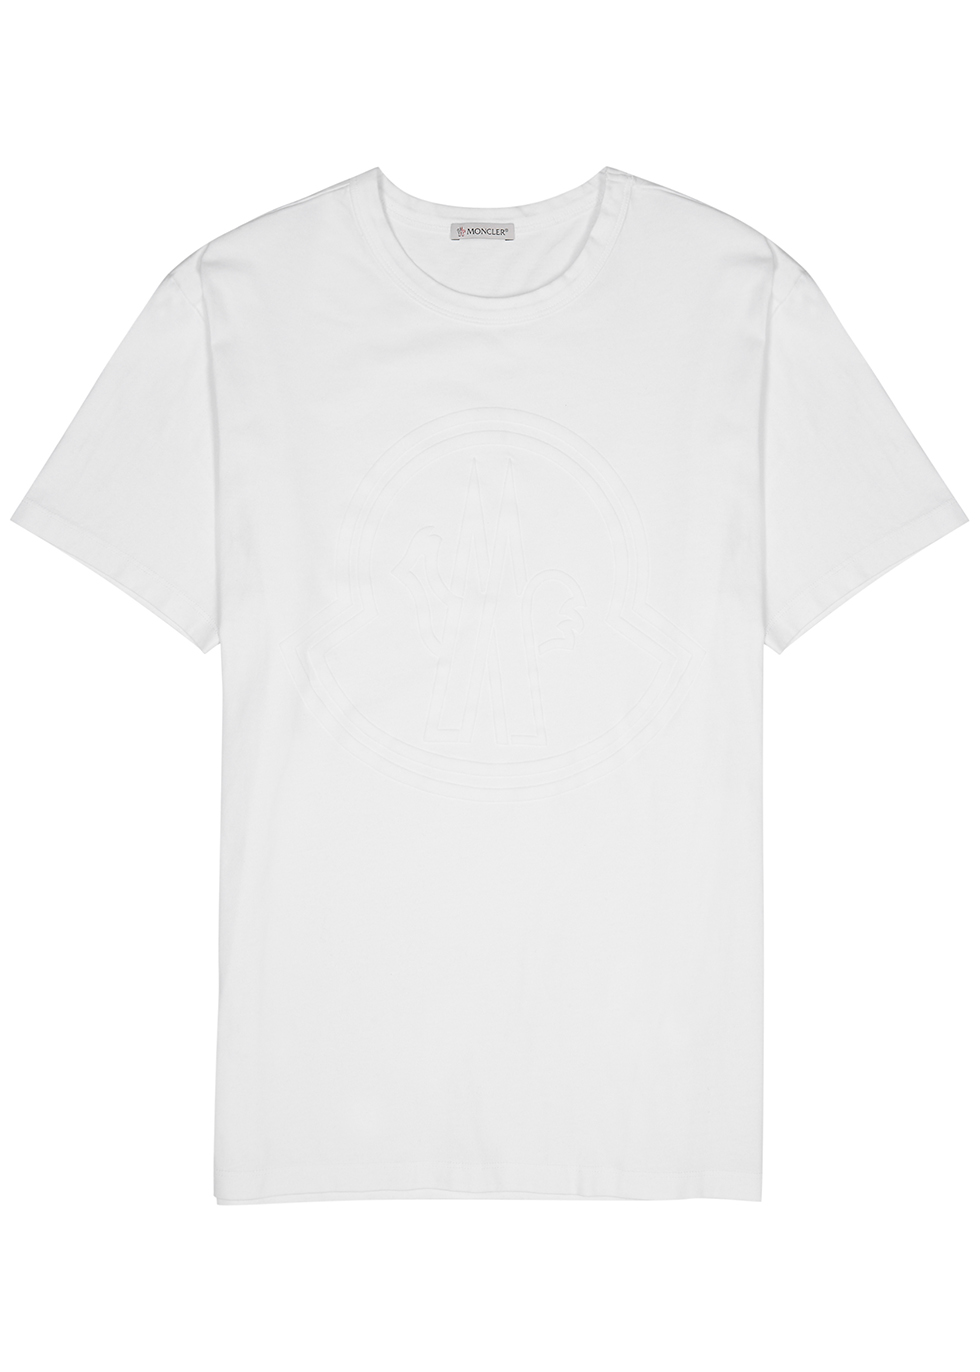 white moncler t shirt mens